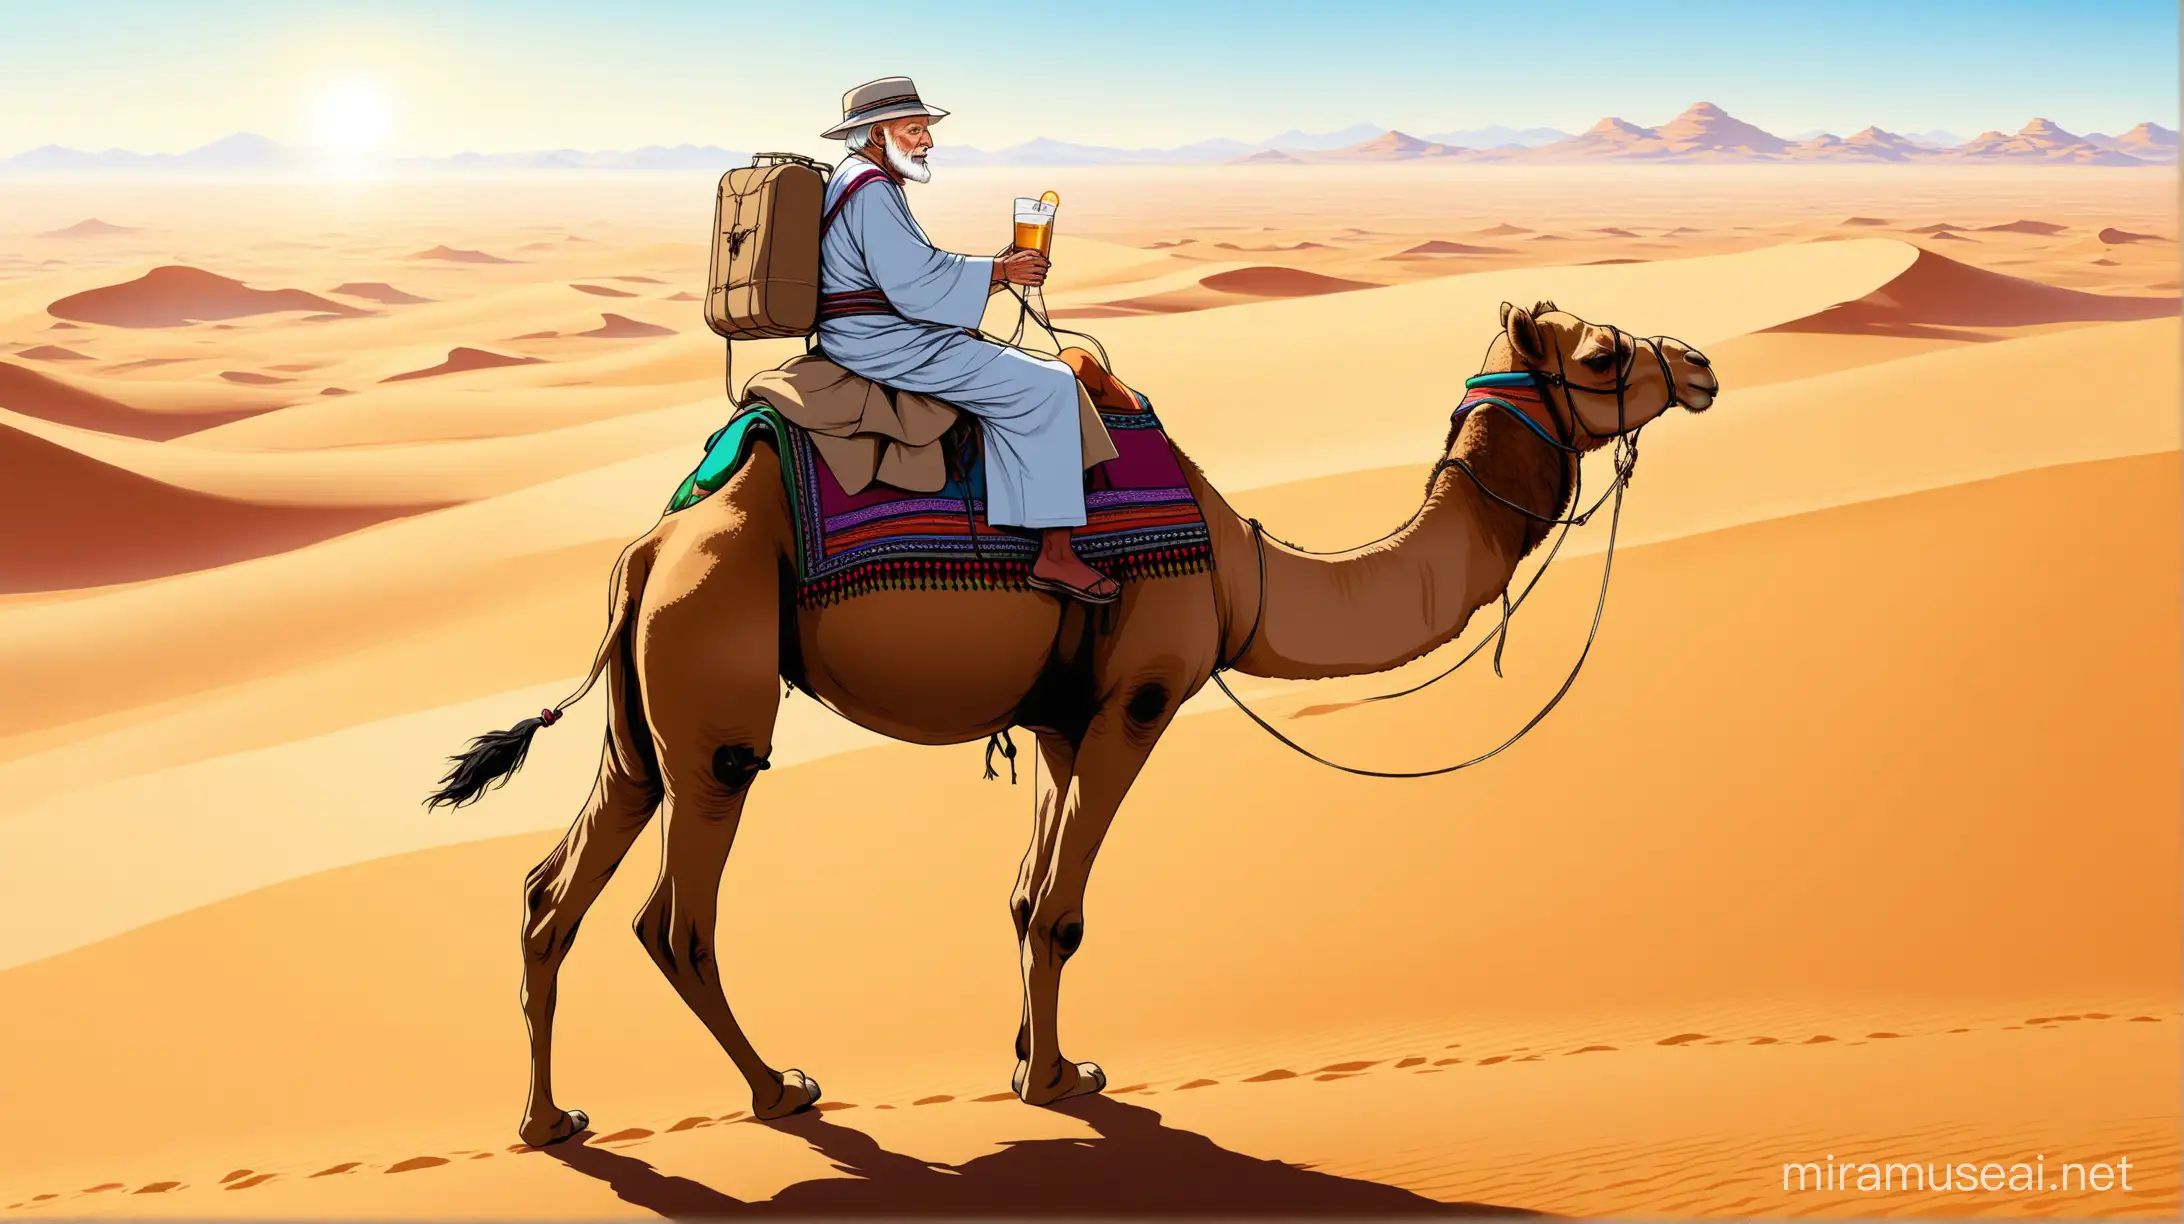 Thirsty Old Man Riding Camel in Desert Landscape